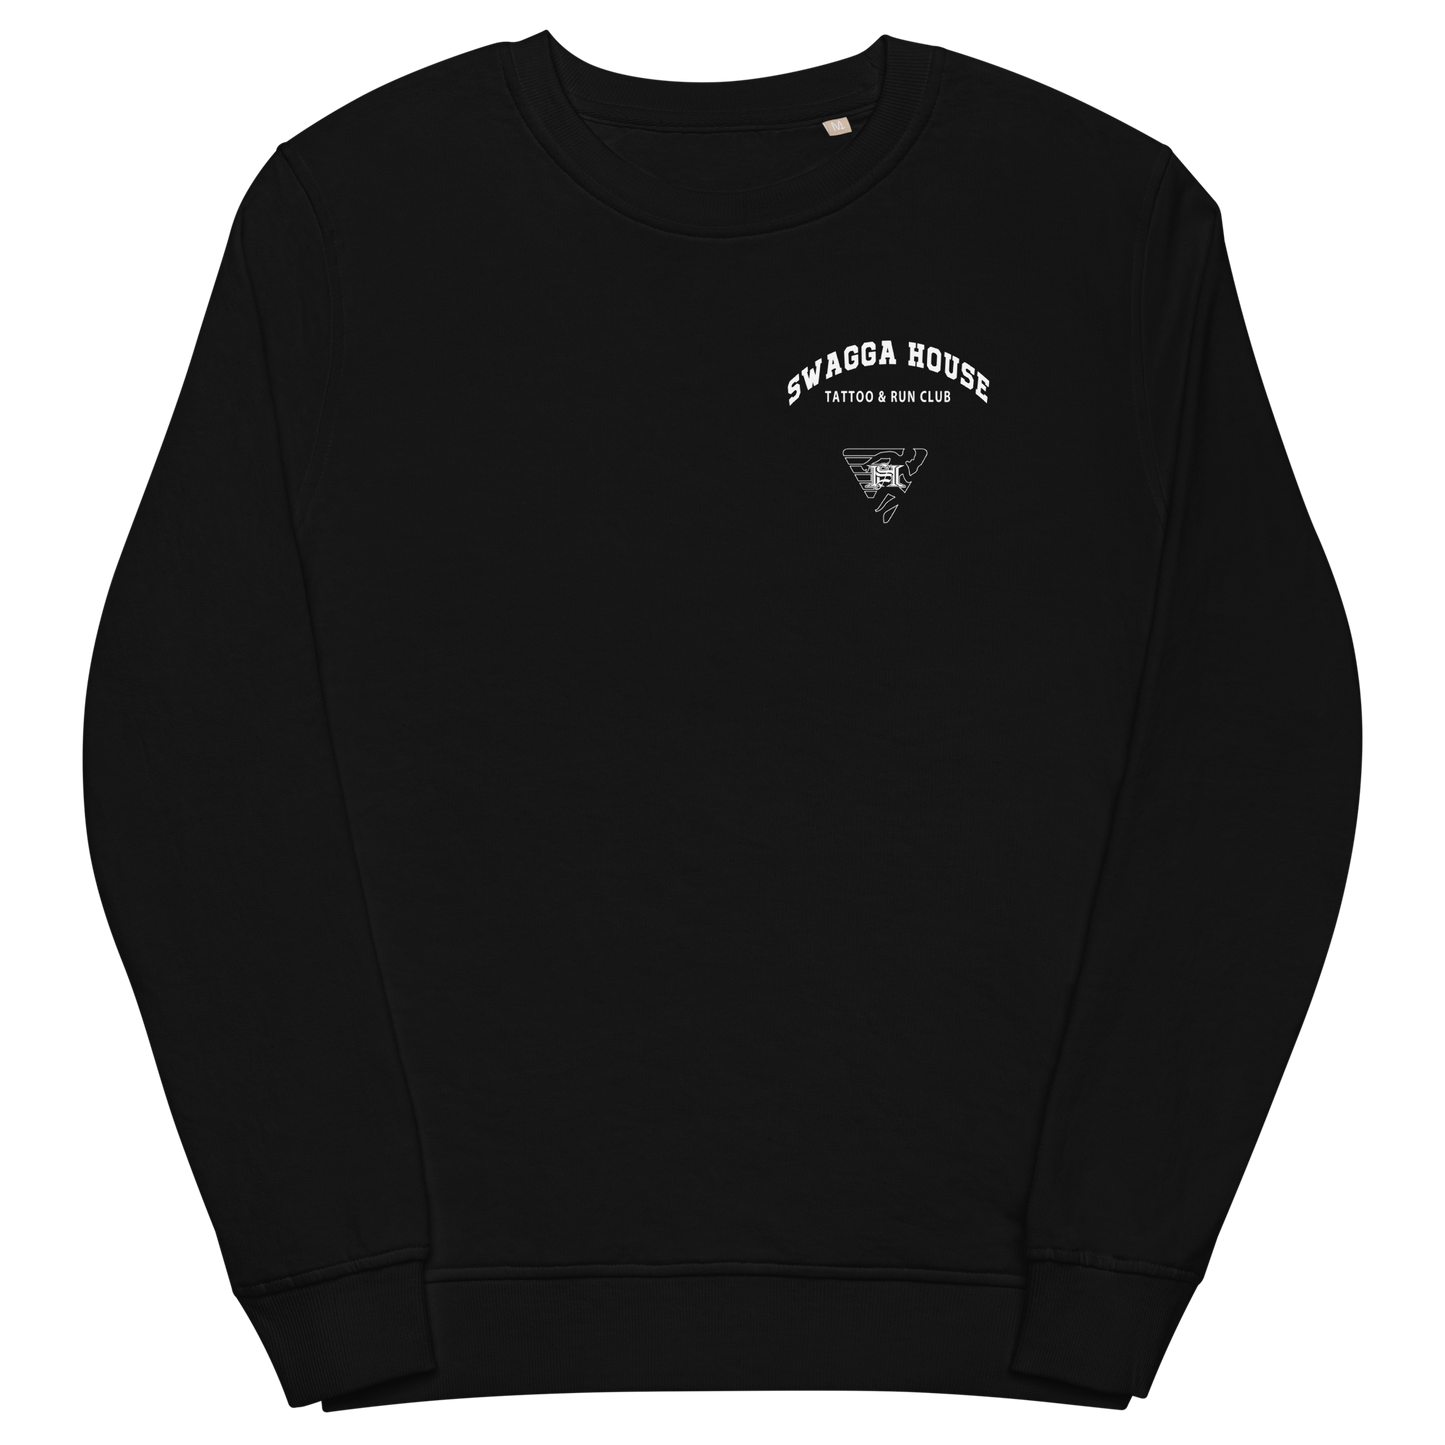 Unisex organic SHRC TATTOO & RUN CLUB  ICON sweatshirt